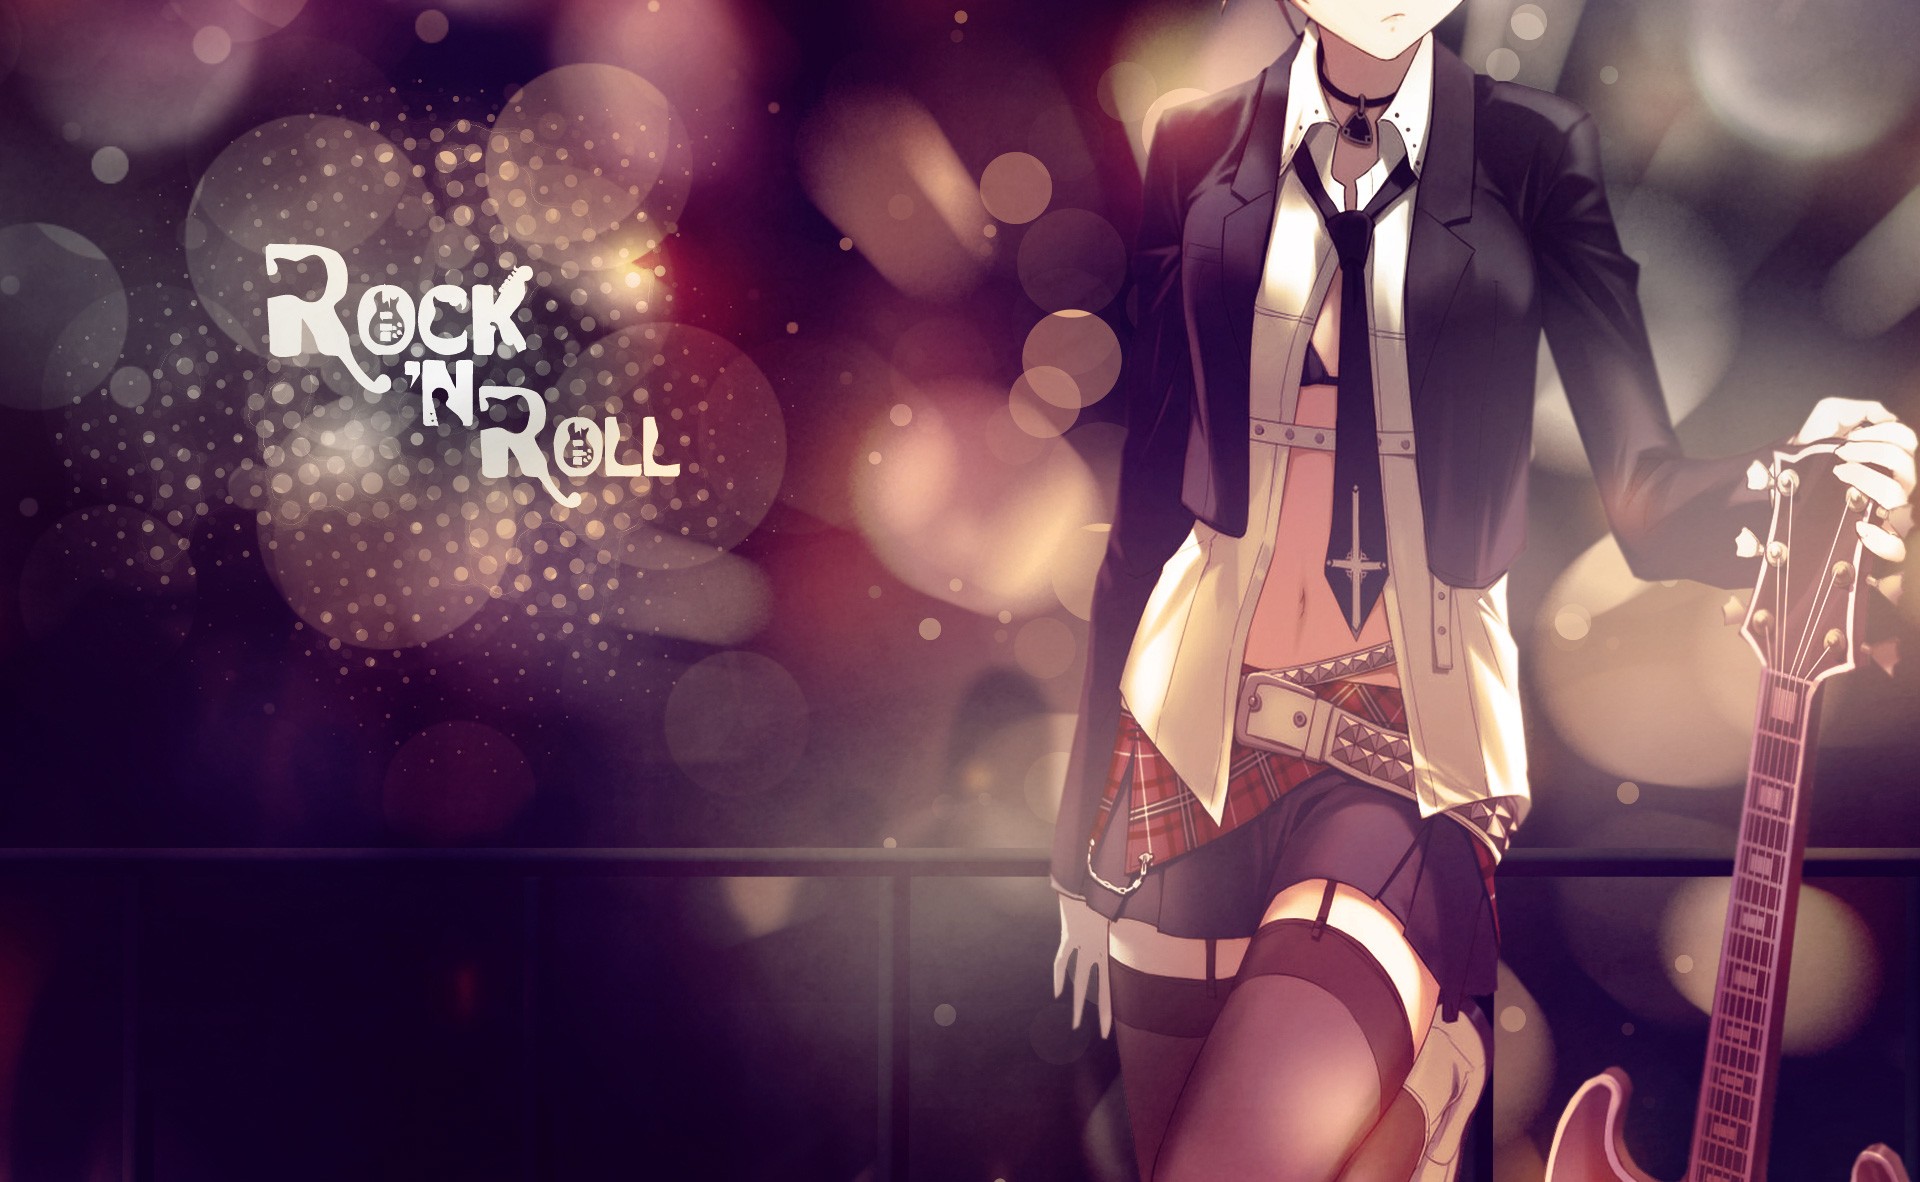 Anime 1920x1182 rock and roll anime girls anime stockings miniskirt tie guitar musical instrument black stockings belly